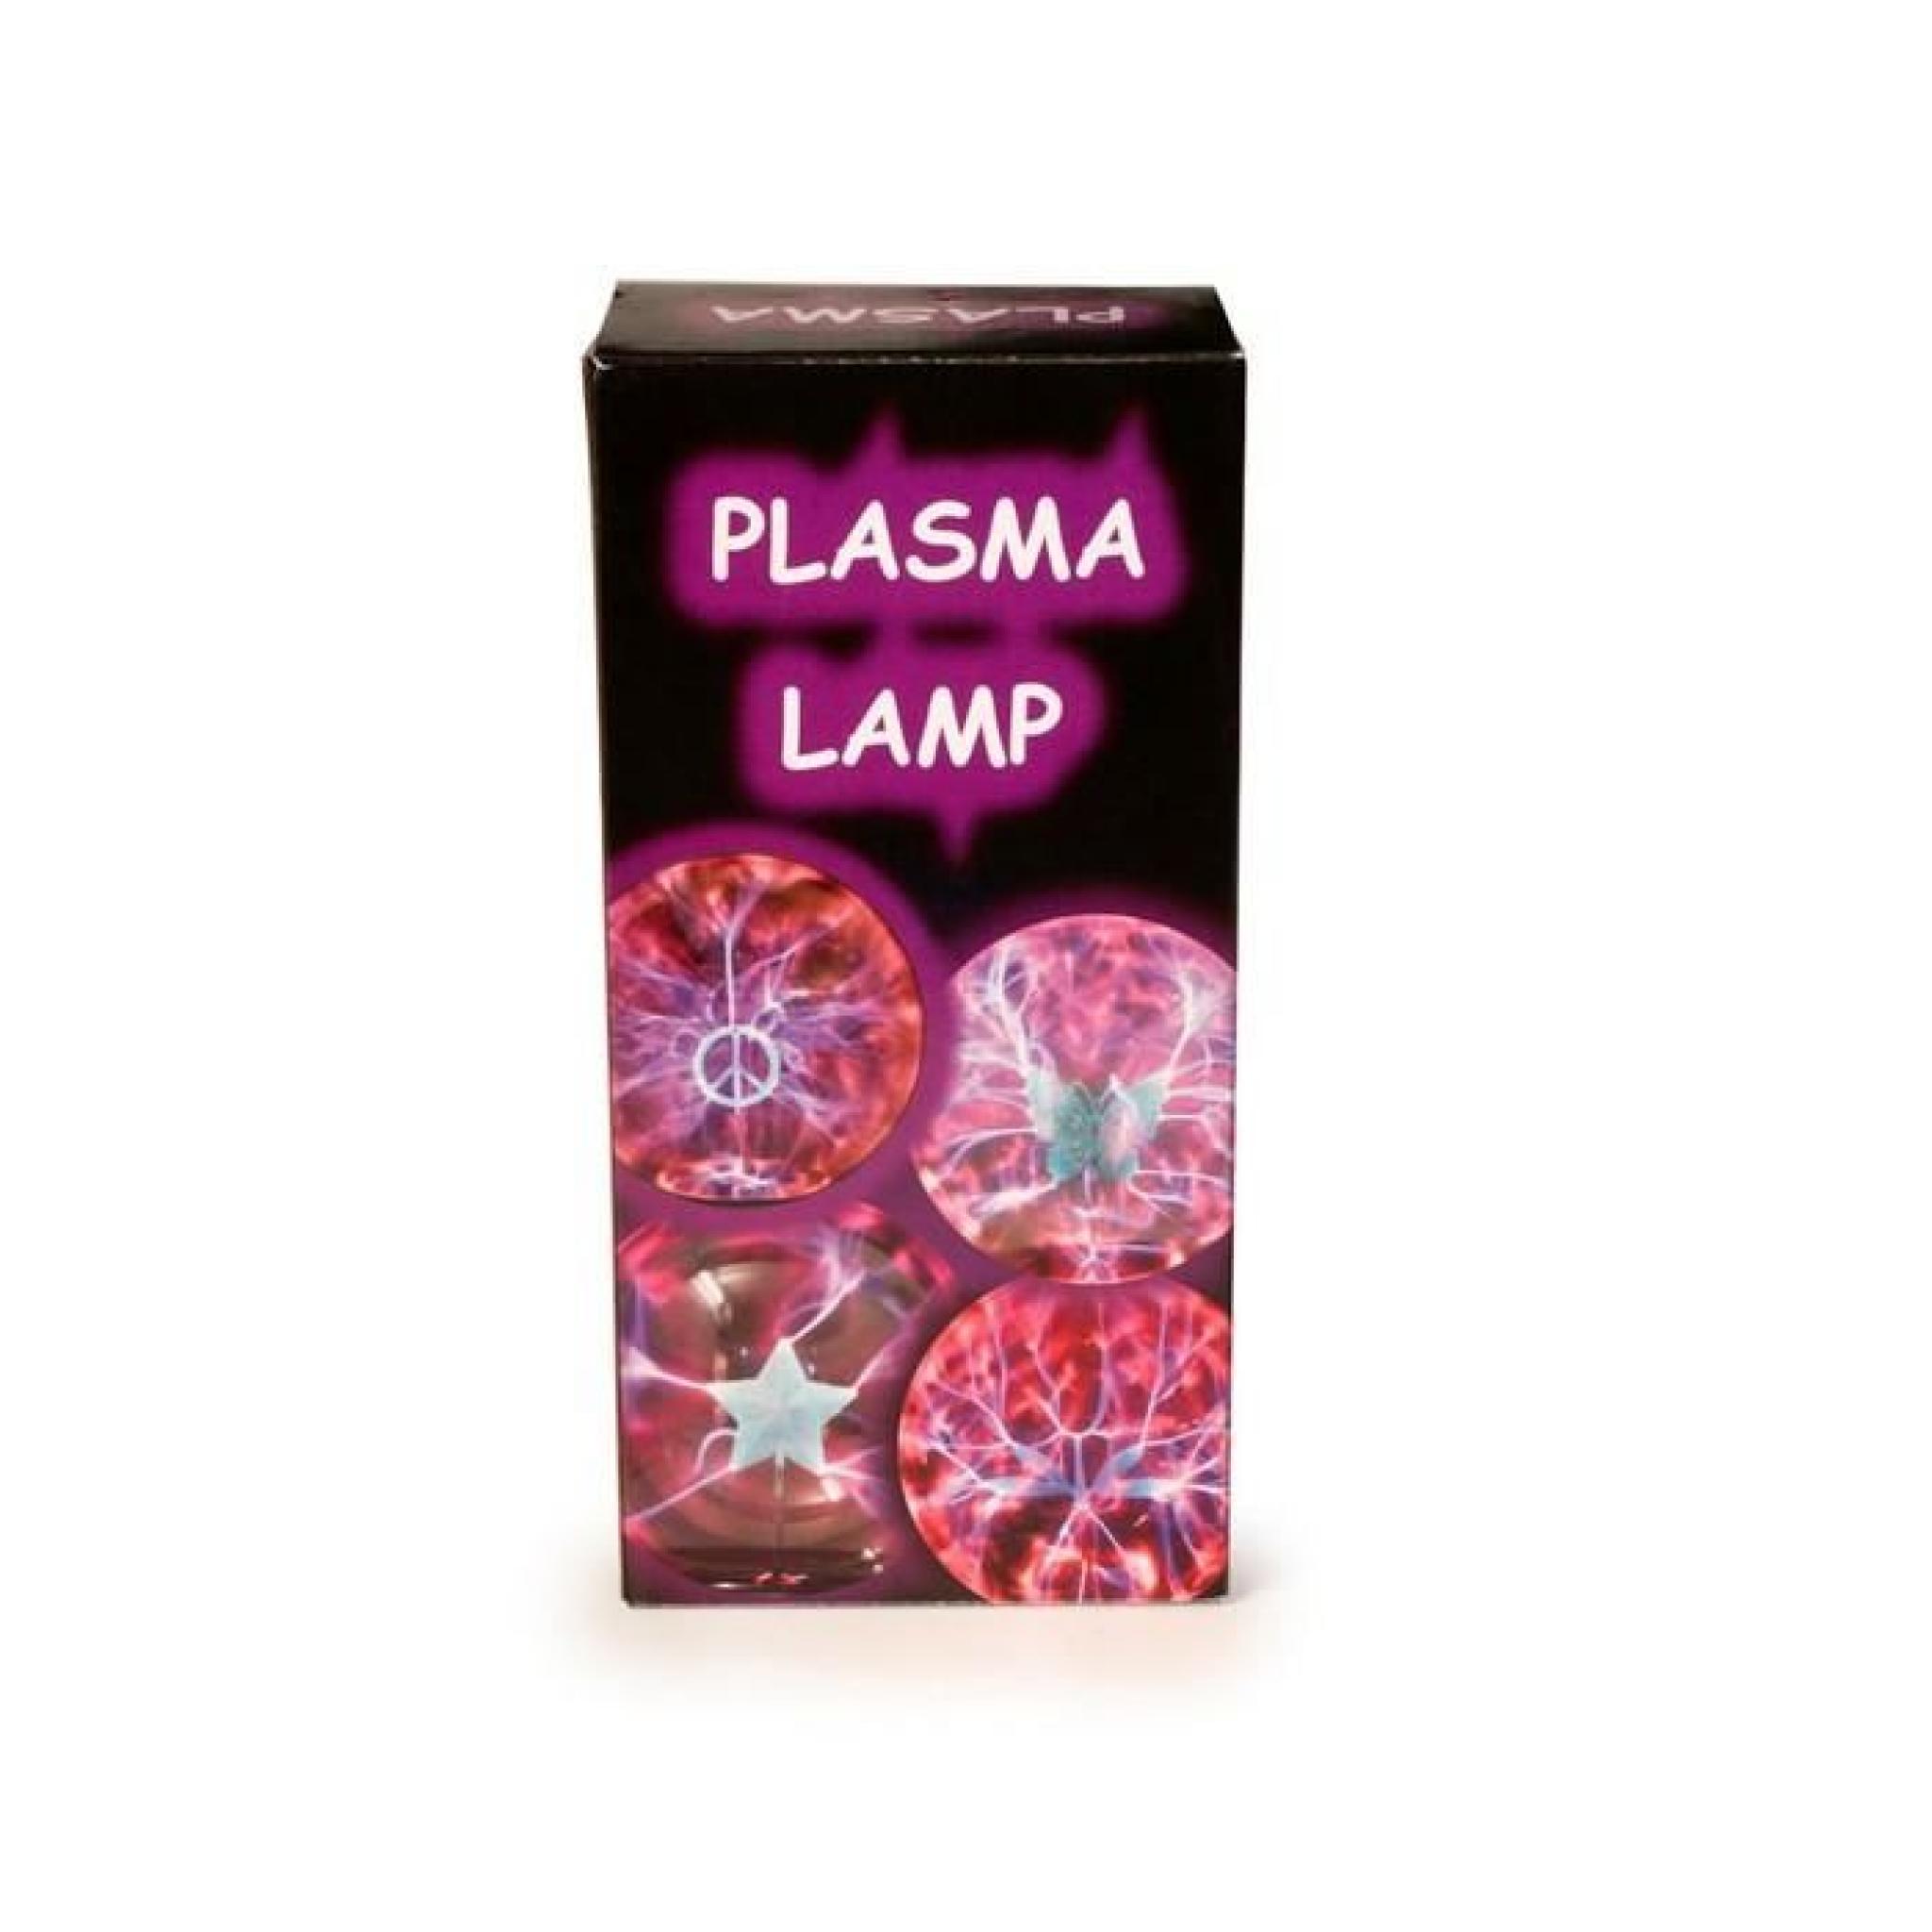 Lampe plasma libellule, cadeau design pas cher